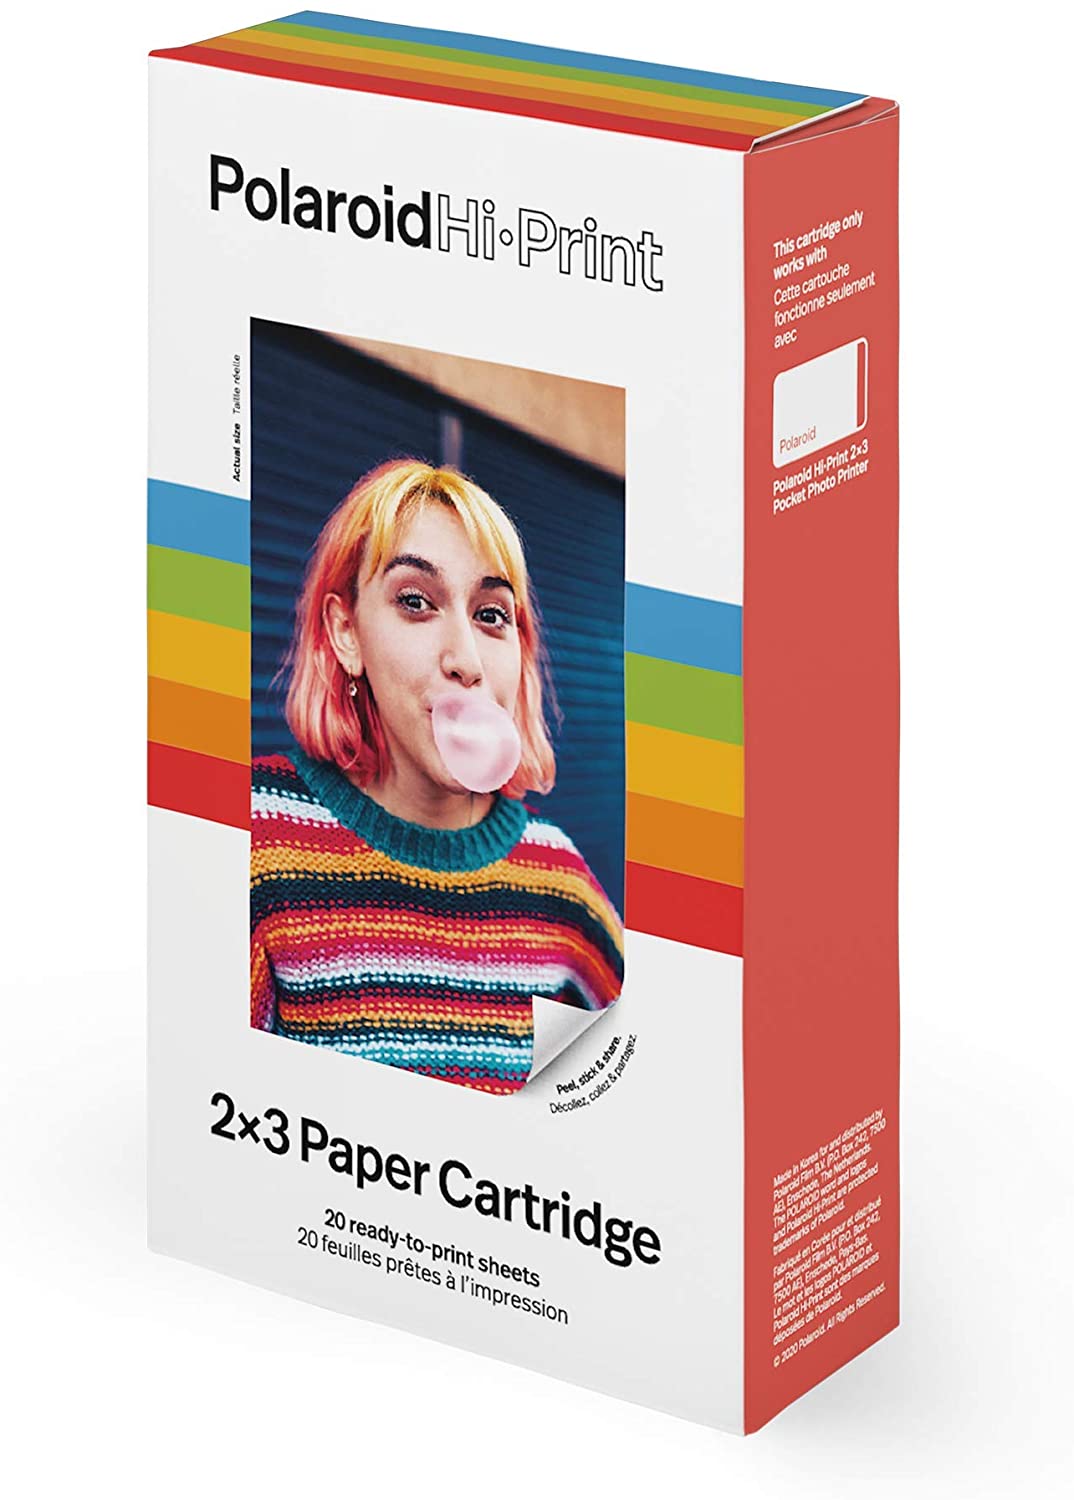 Polaroid Hi-Print Paper - 2x3 Paper Cartridge (20 Sheets) Dye-Sub (Not  Zink) Cartridge